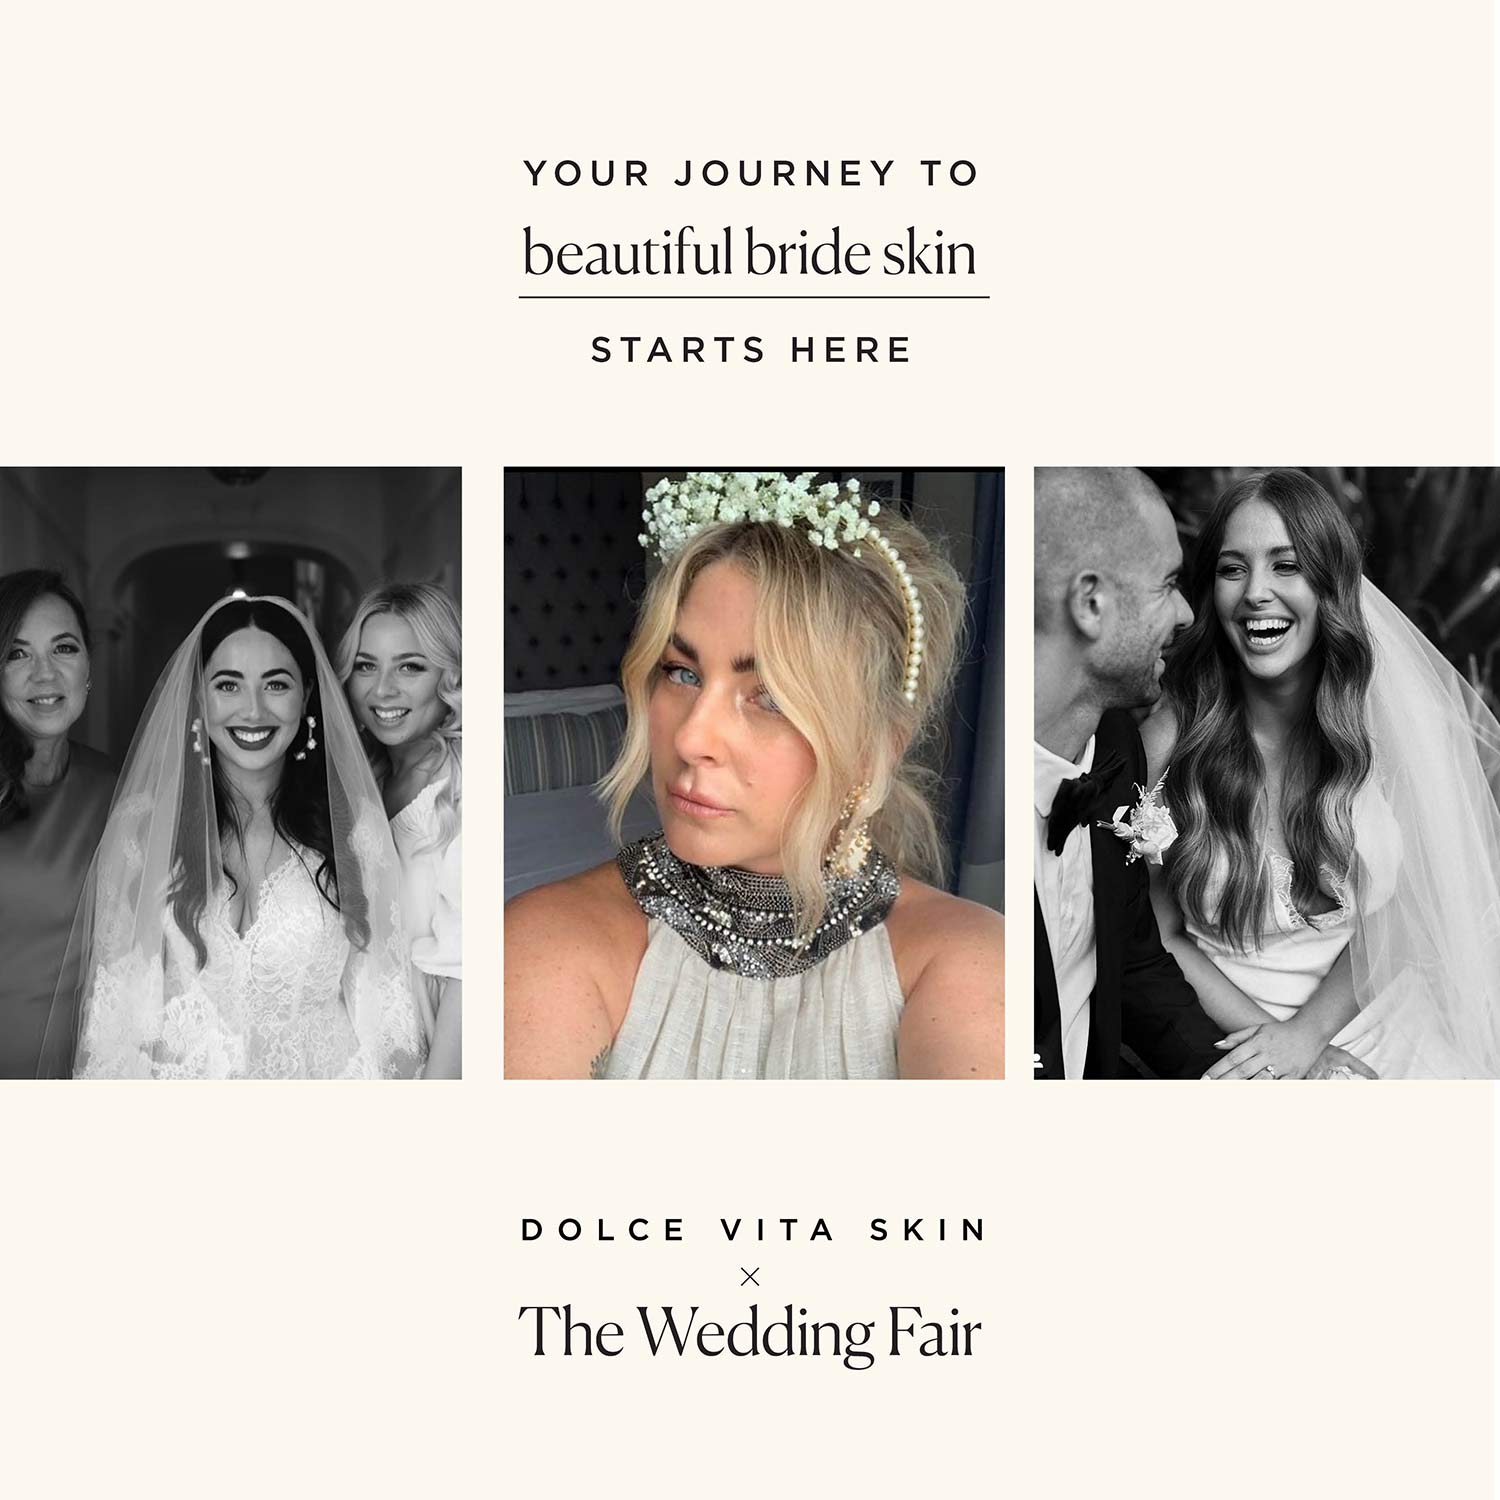 Dolce Vita Skin x The Wedding Fair